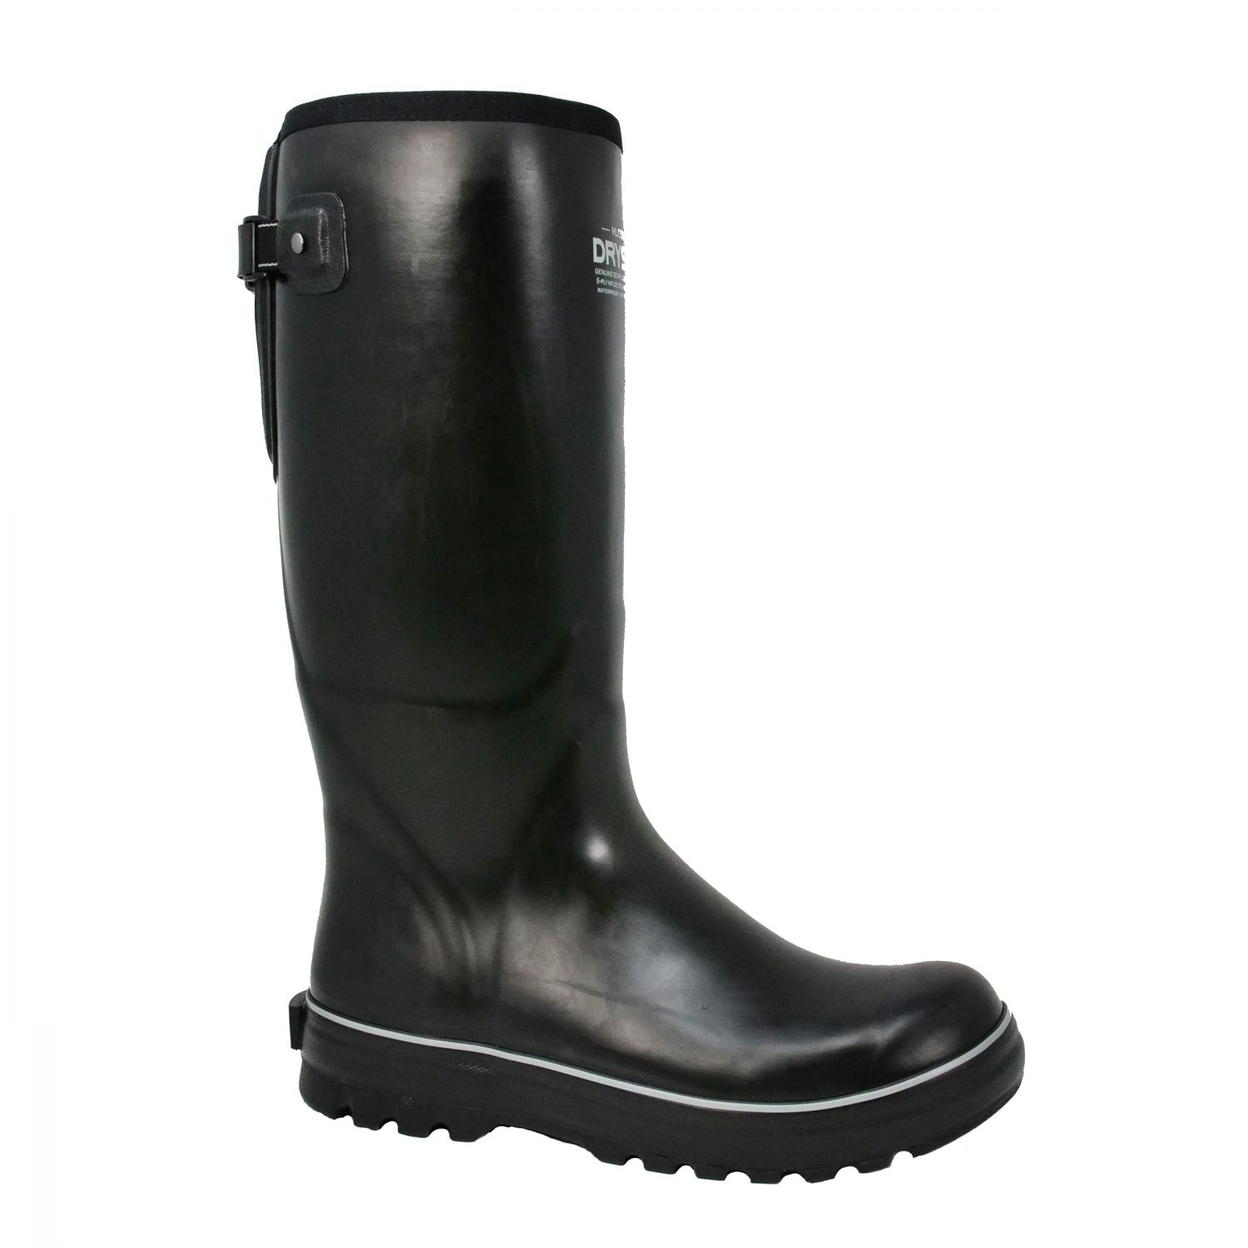 Dryshod Men's Mudslinger Gusset Premium Rubber Farm Boots Black/Grey - MDG-MH-BK ONE SIZE BLACK/GREY - BLACK/GREY, 11